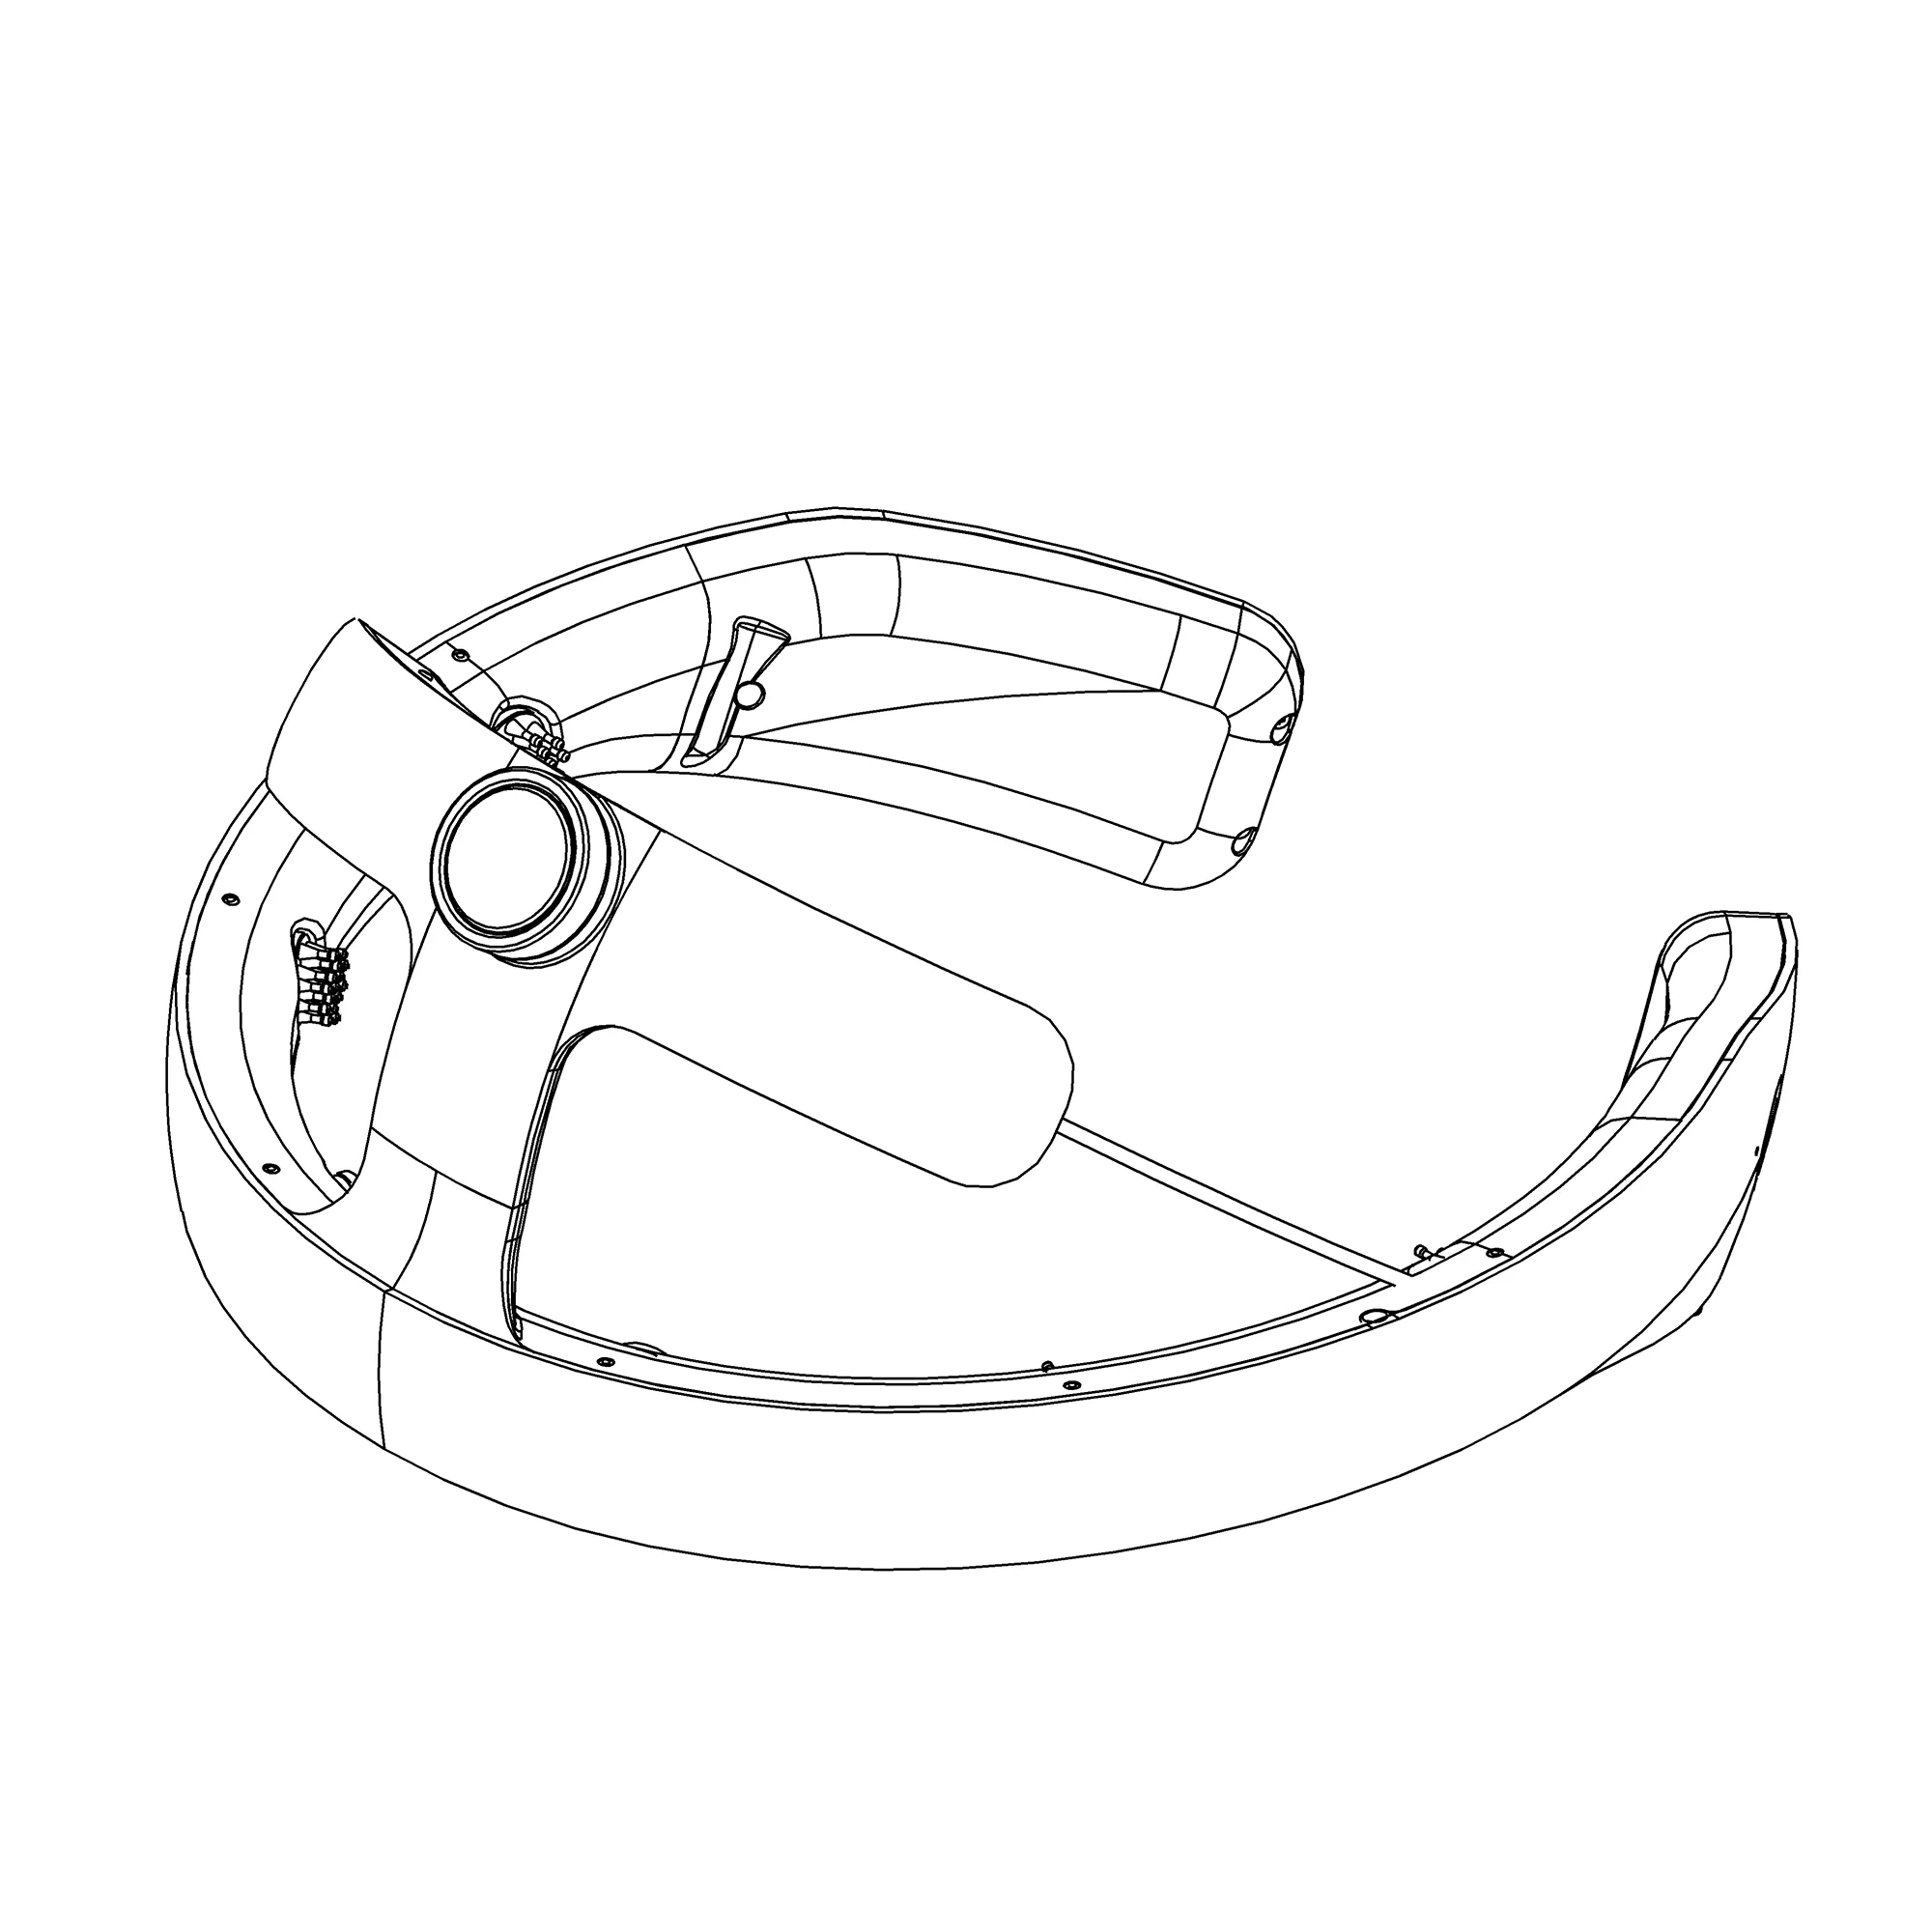 EEG_Headset_Imec_lifestyle_and_medical_2D_tekening